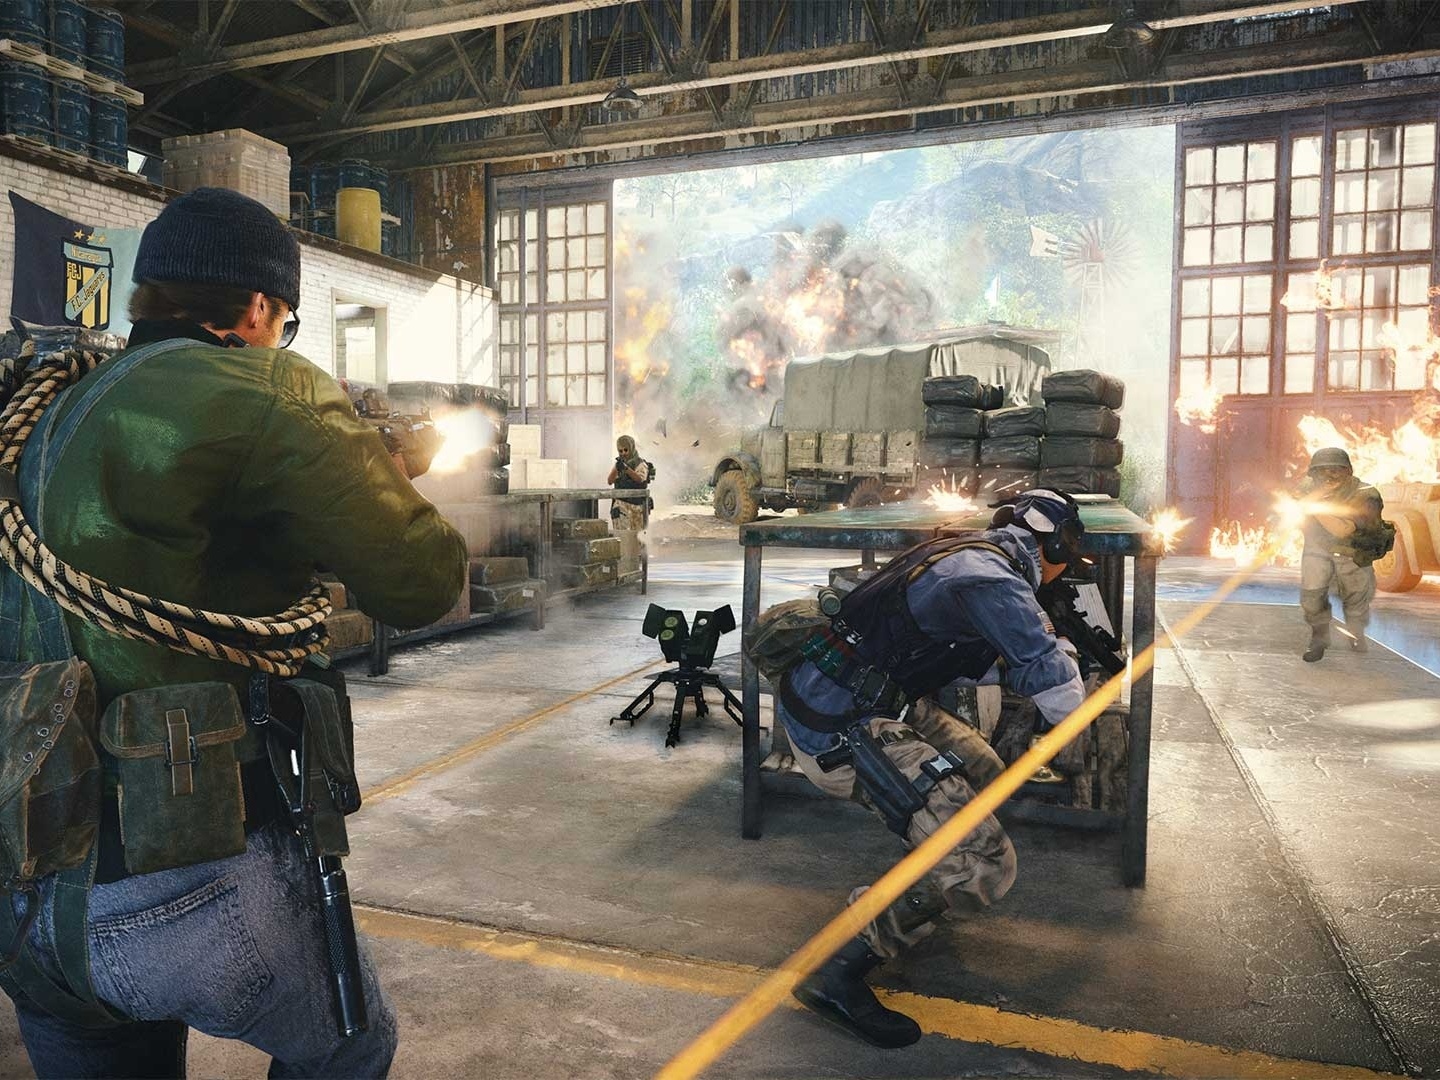 Call Of Duty WW2 World Wars 2 PS4 Mídia Física Pronta Entrega